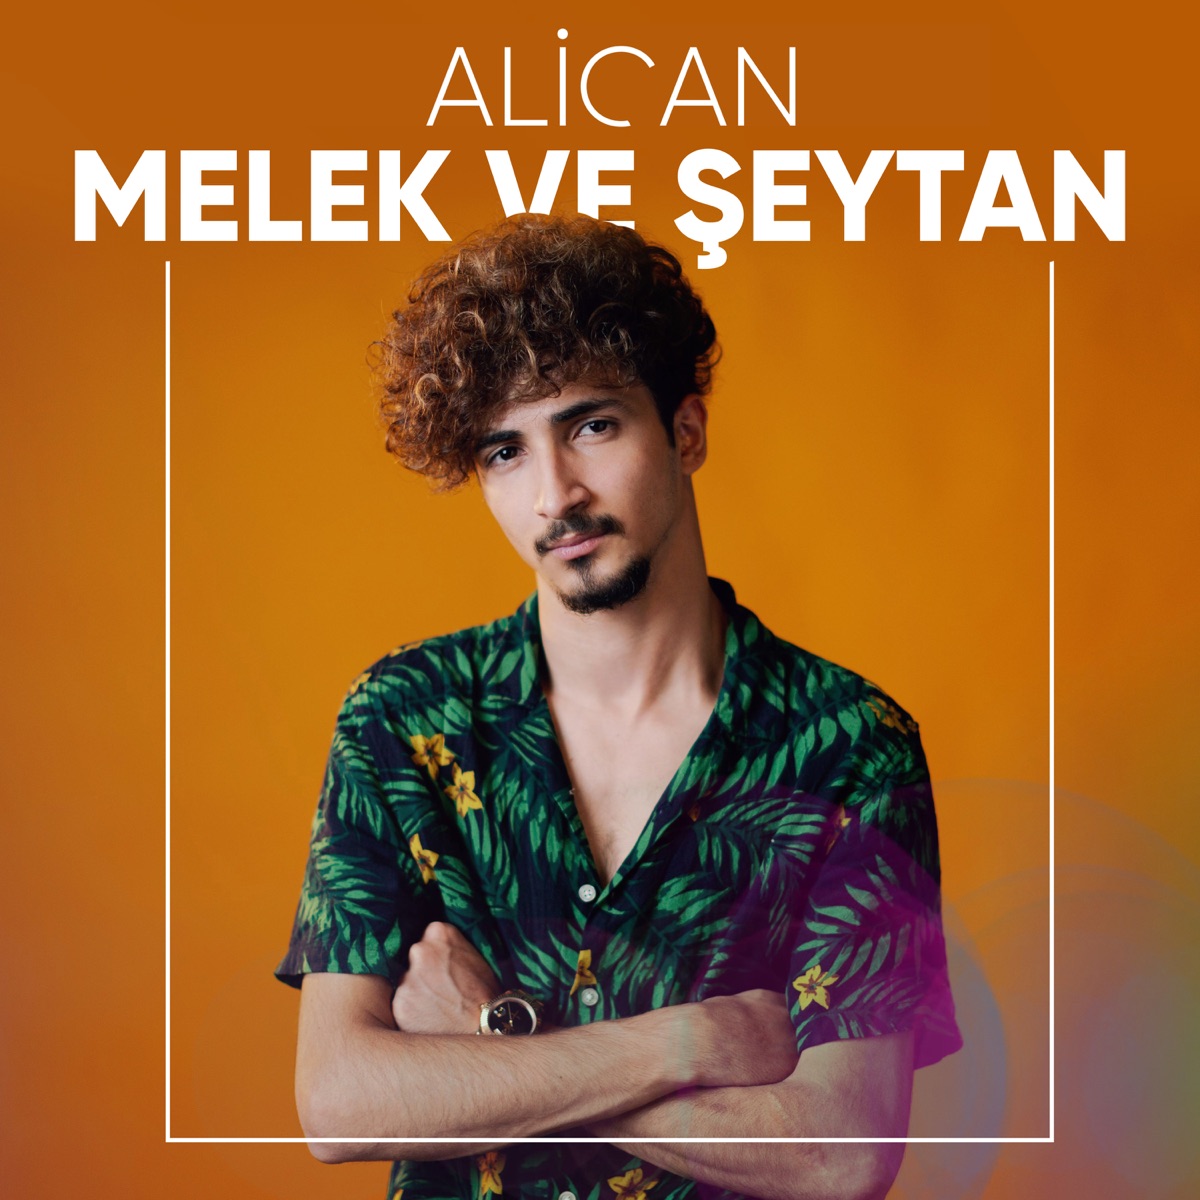 Yandim Ay Aman (Acoustic) - Single by Alican on Apple Music